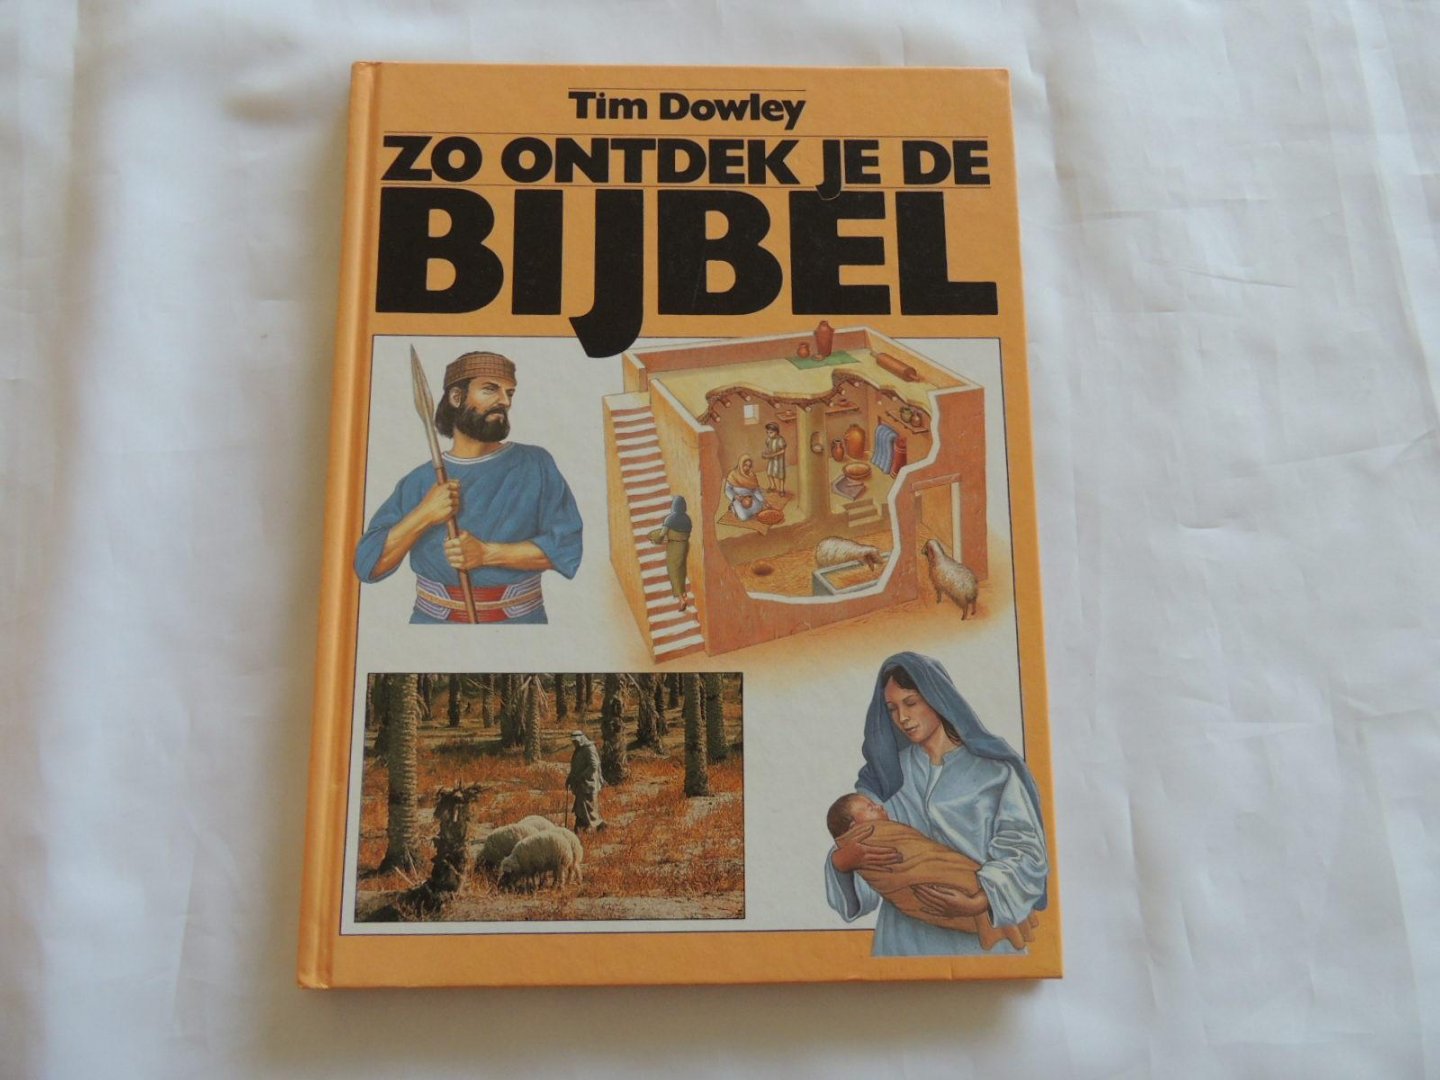 Dowley, Tim e.a. - zo ontdek je de bijbel